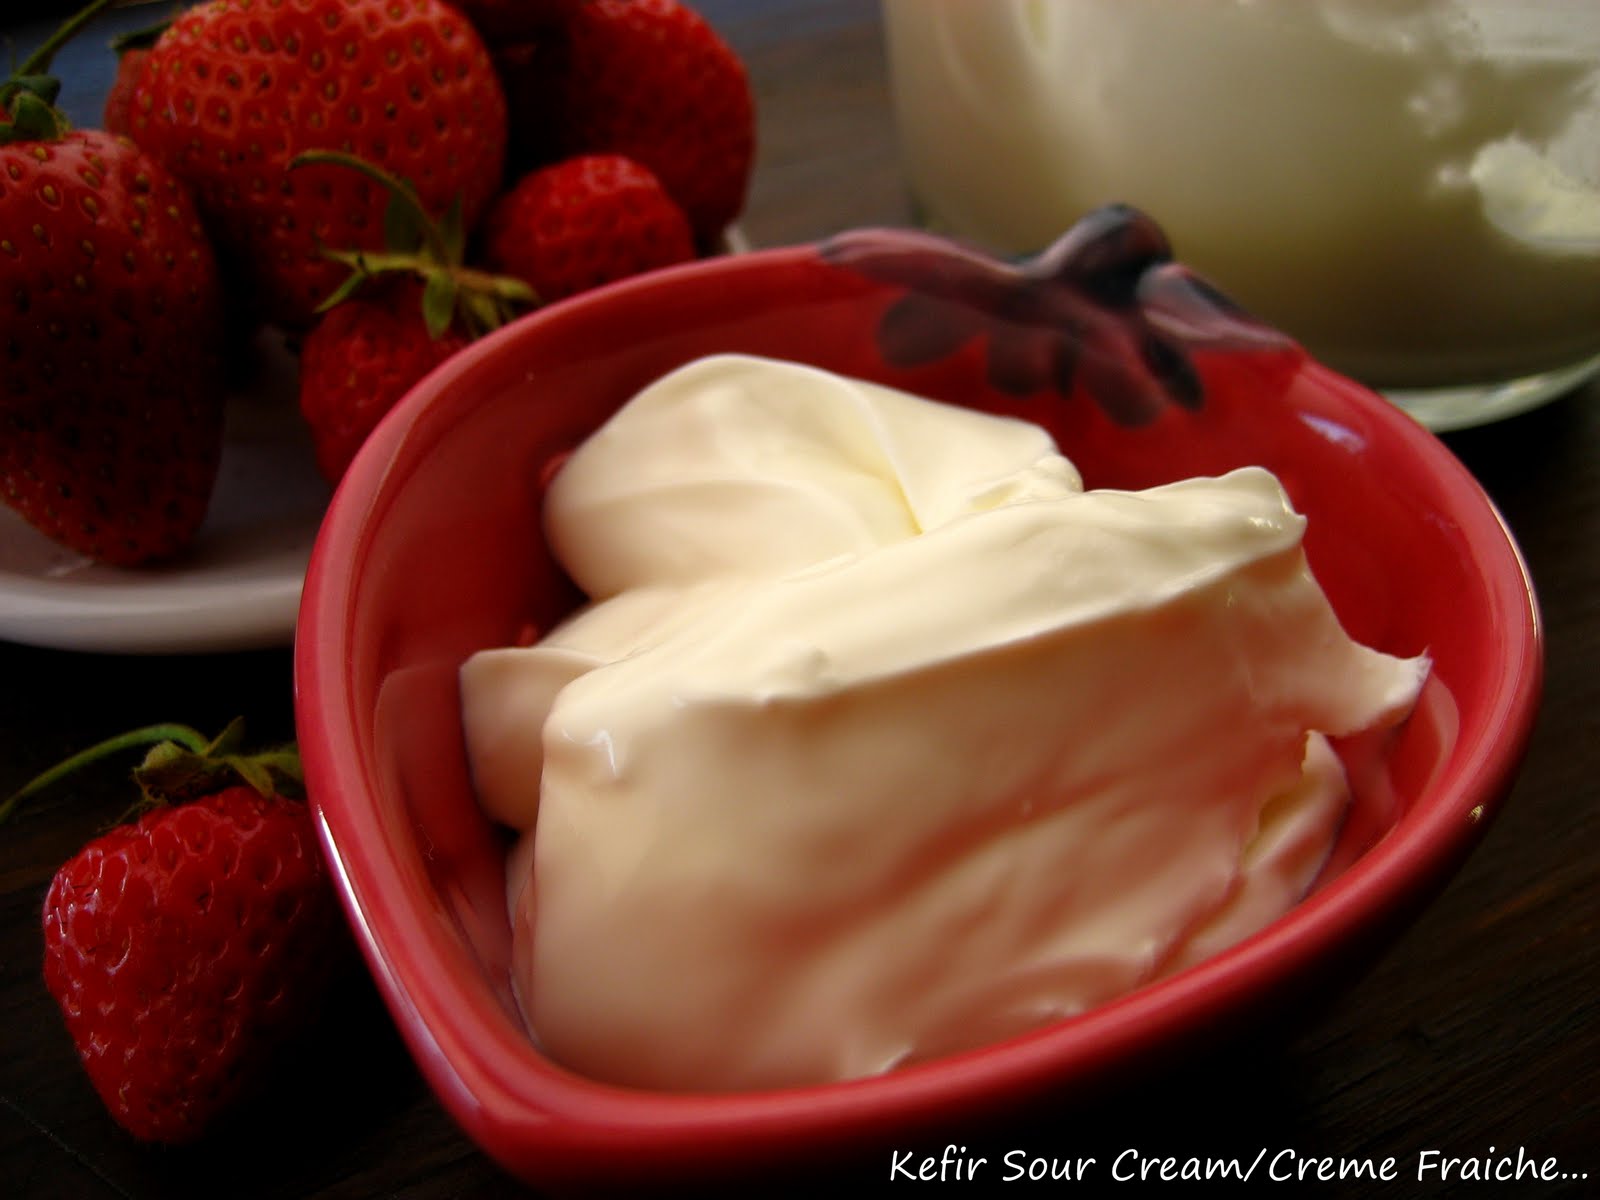 Home Cooking In Montana: Homemade Sour Cream/Creme Fraiche...using ...